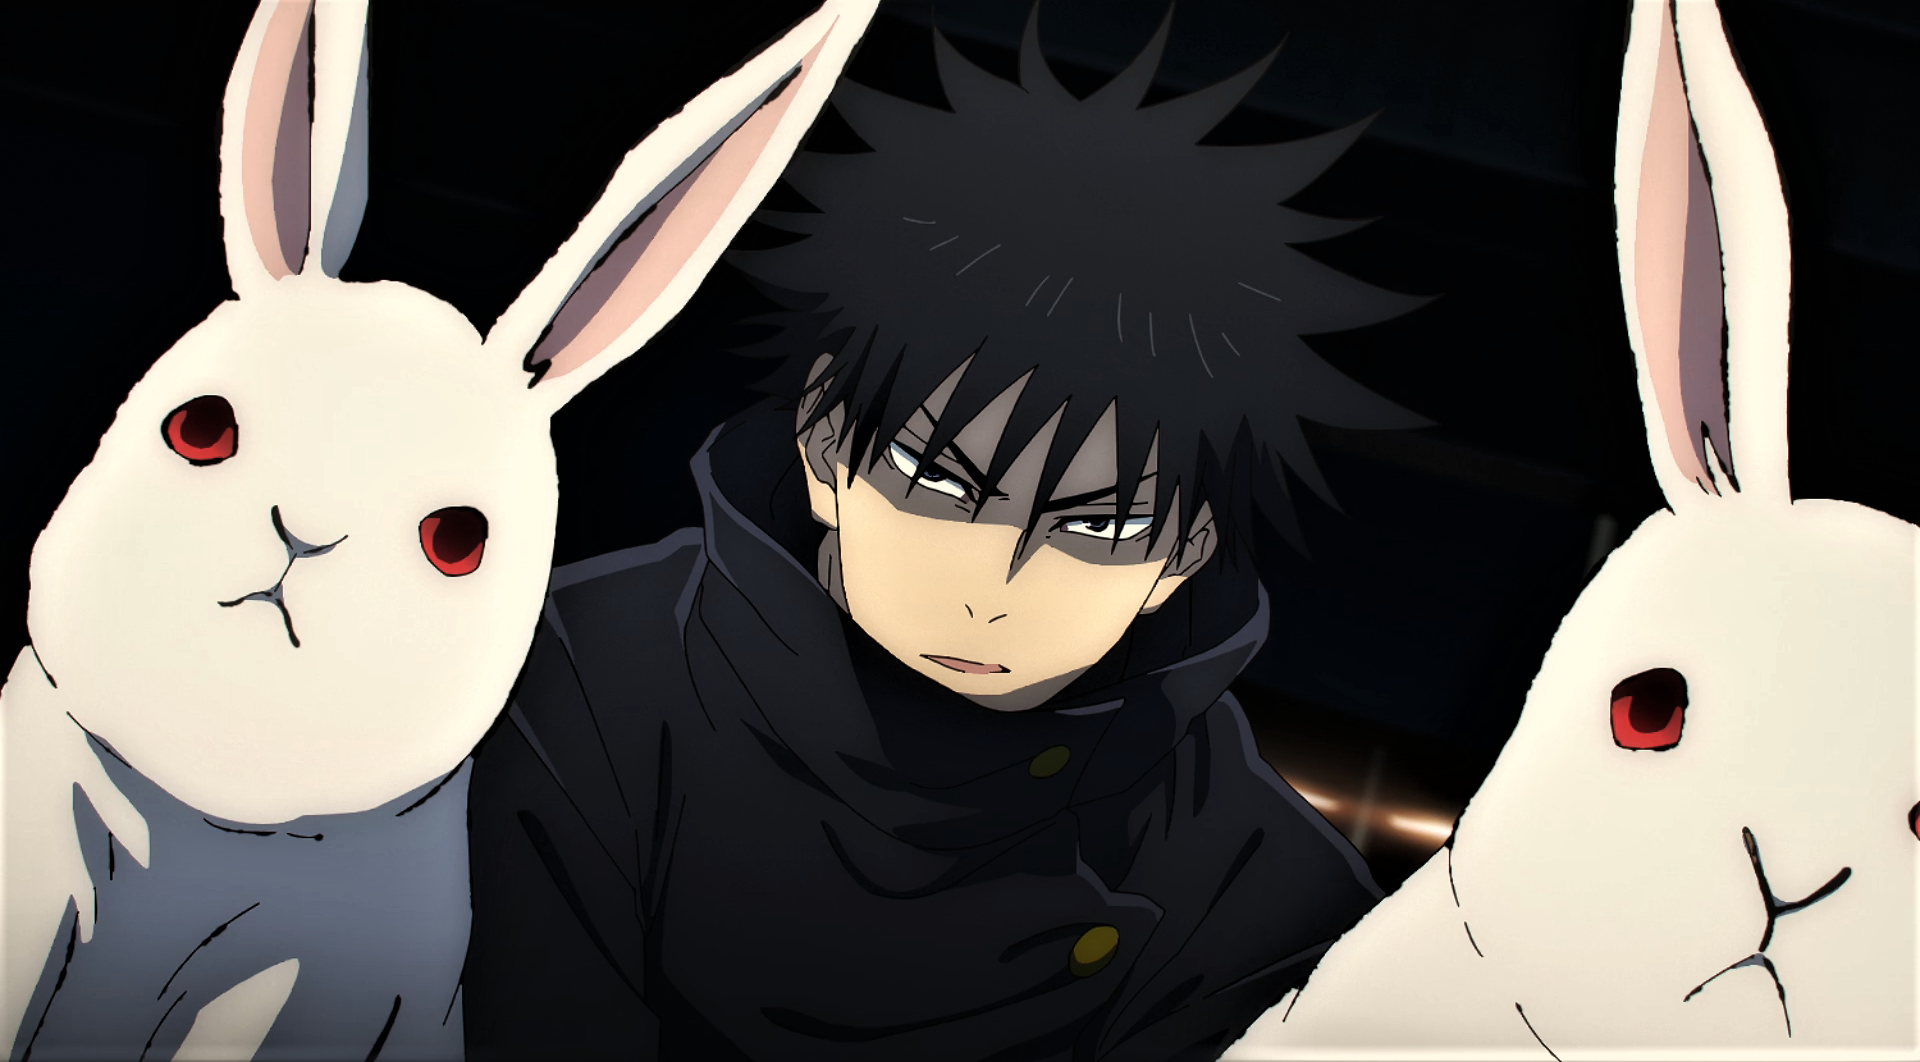 Anime 1920x1062 Jujutsu Kaisen Megumi Fushiguro bunny ears rabbits red eyes angry Spiky Hair uniform anime anime screenshot anime boys